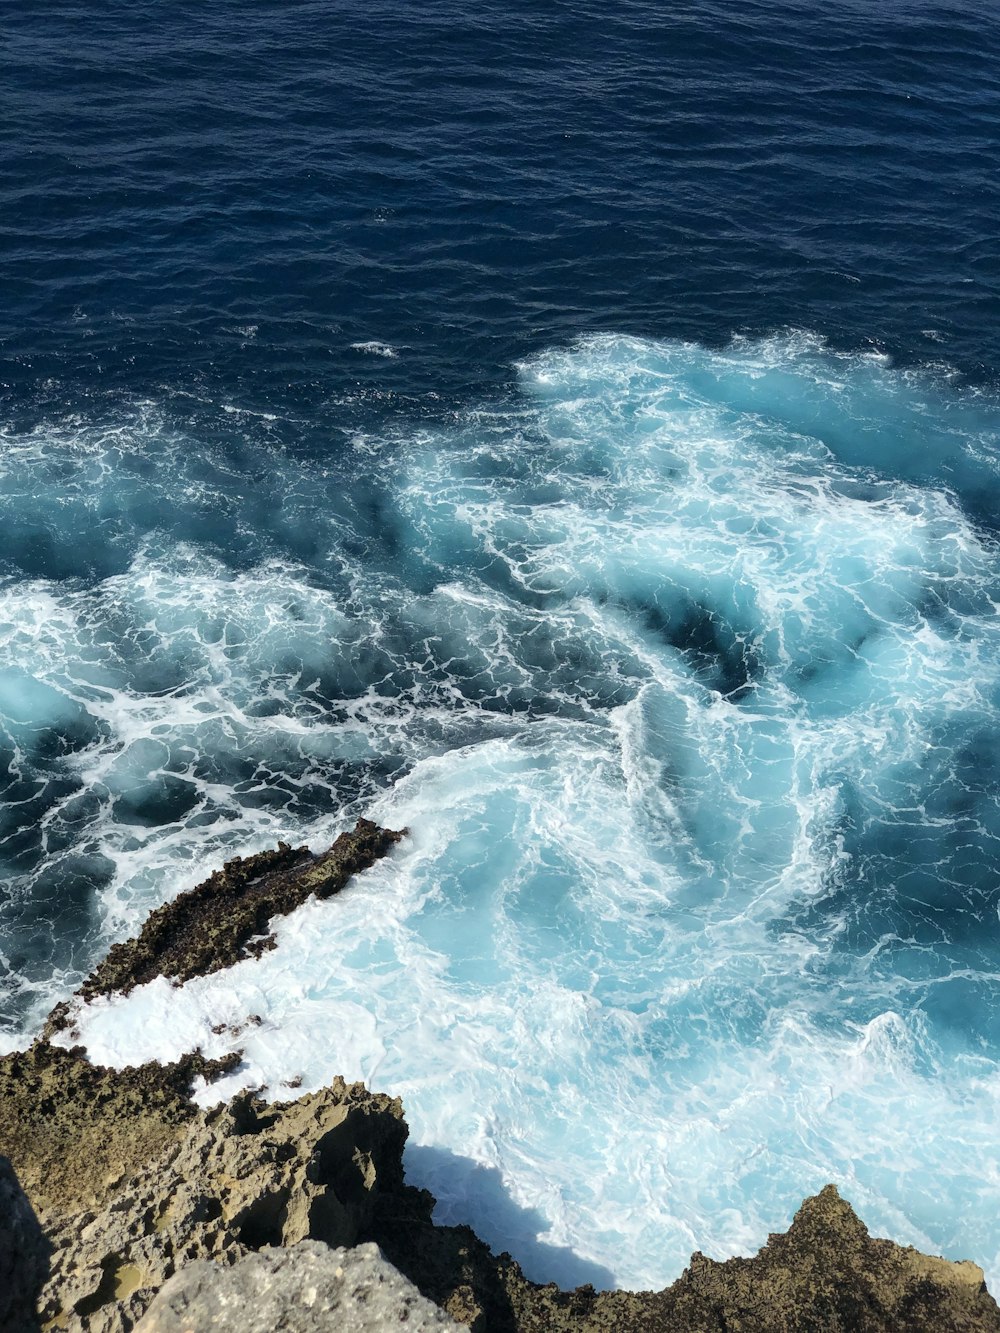 blue ocean waves crashing on brown rock formation during daytime